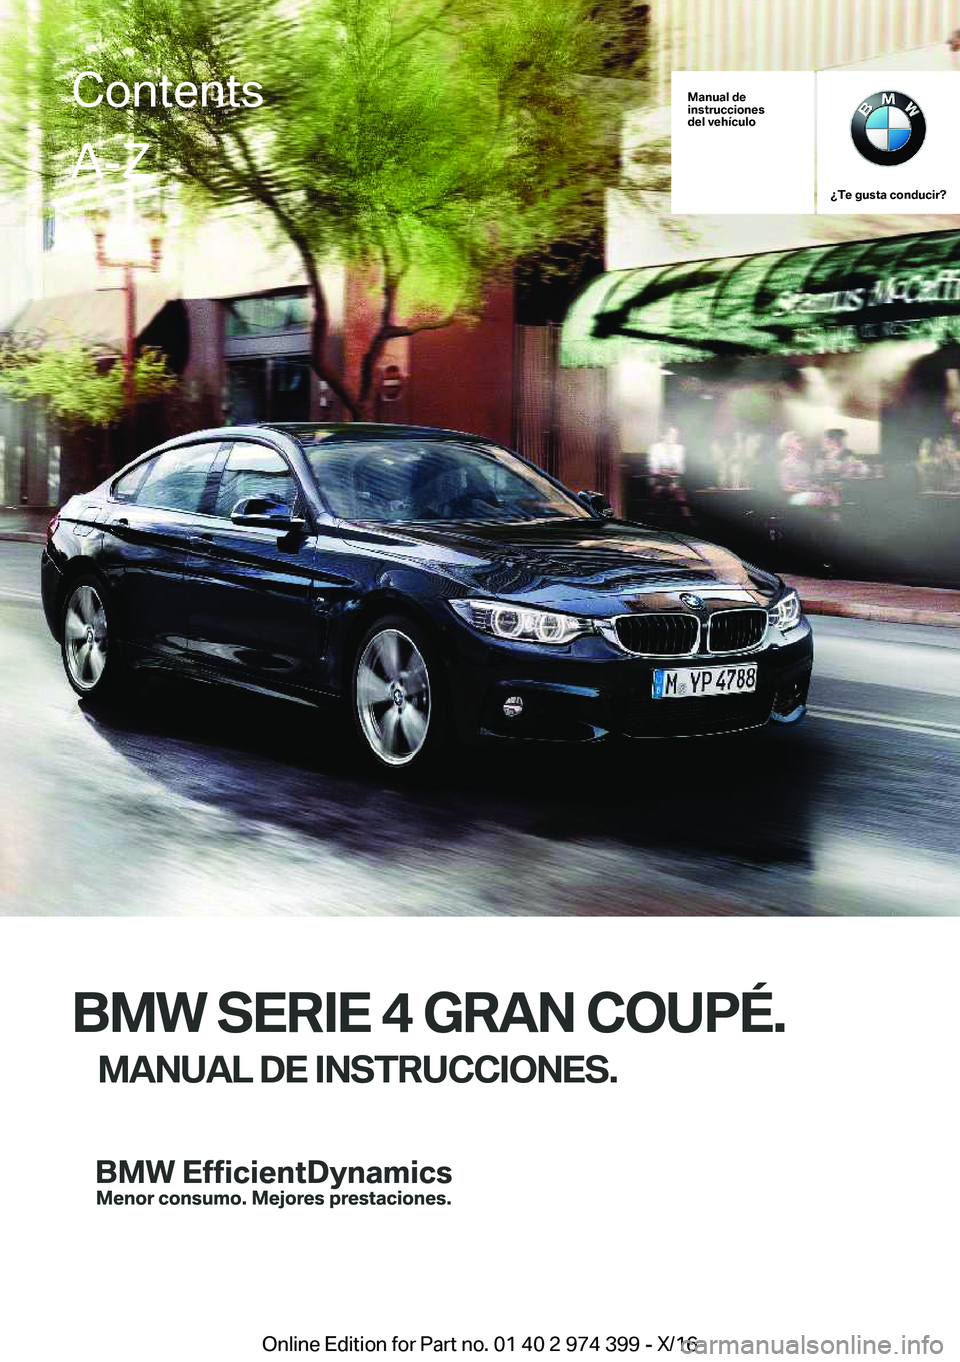 BMW 4 SERIES GRAN COUPE 2017  Manuales de Empleo (in Spanish) �M�a�n�u�a�l��d�e
�i�n�s�t�r�u�c�c�i�o�n�e�s
�d�e�l��v�e�h�